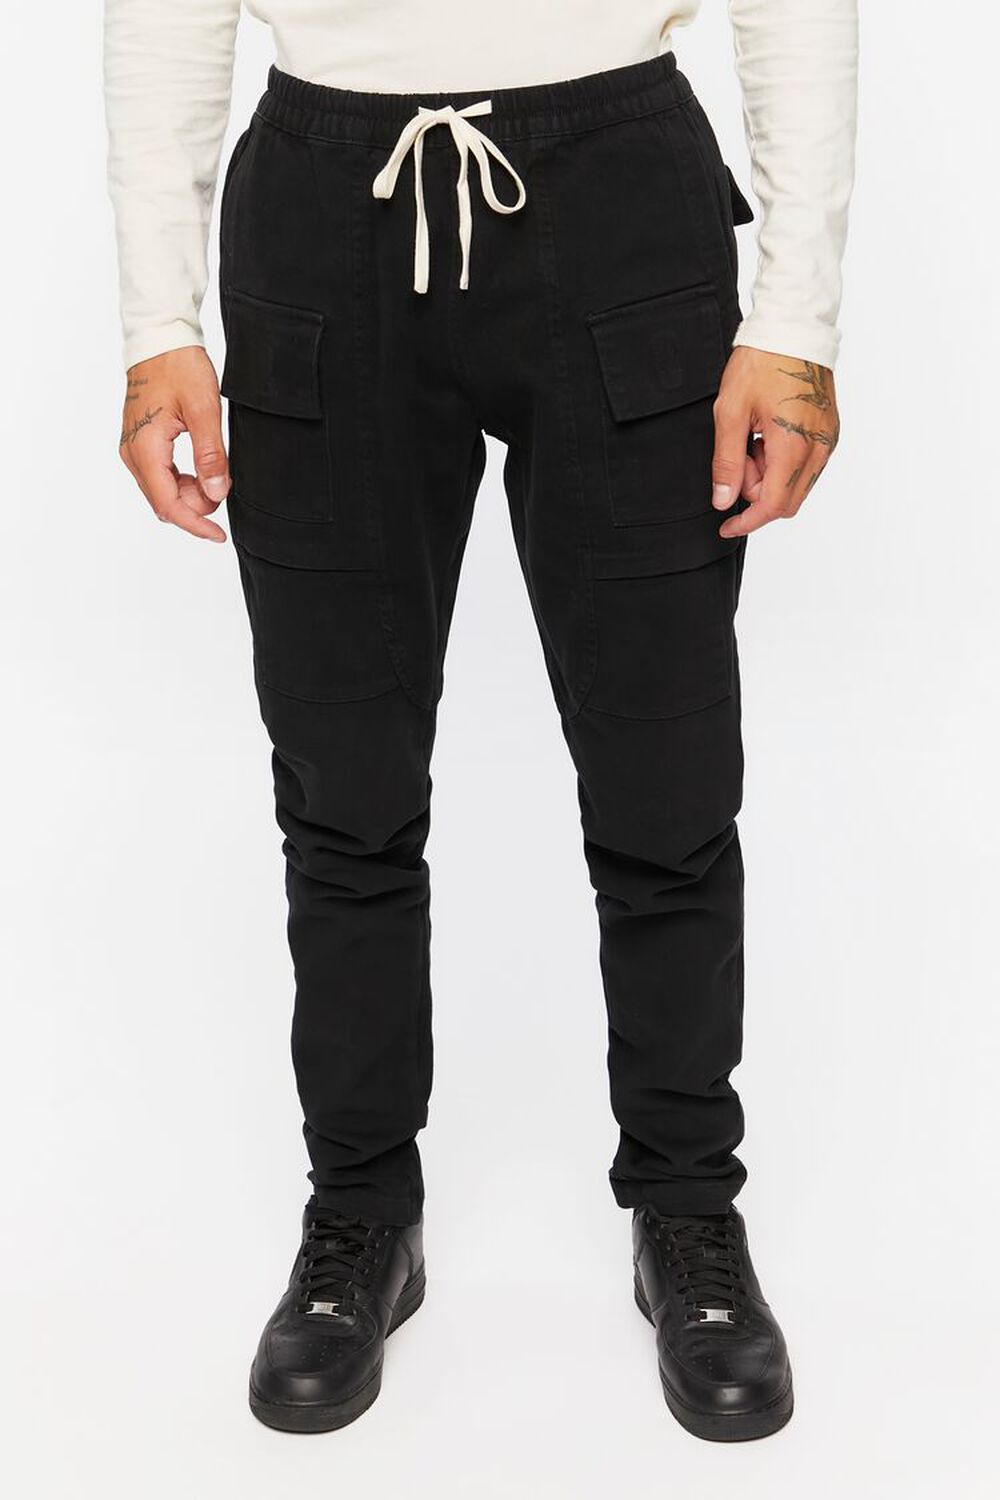 BLACK Slim-Fit Drawstring Pants, image 3